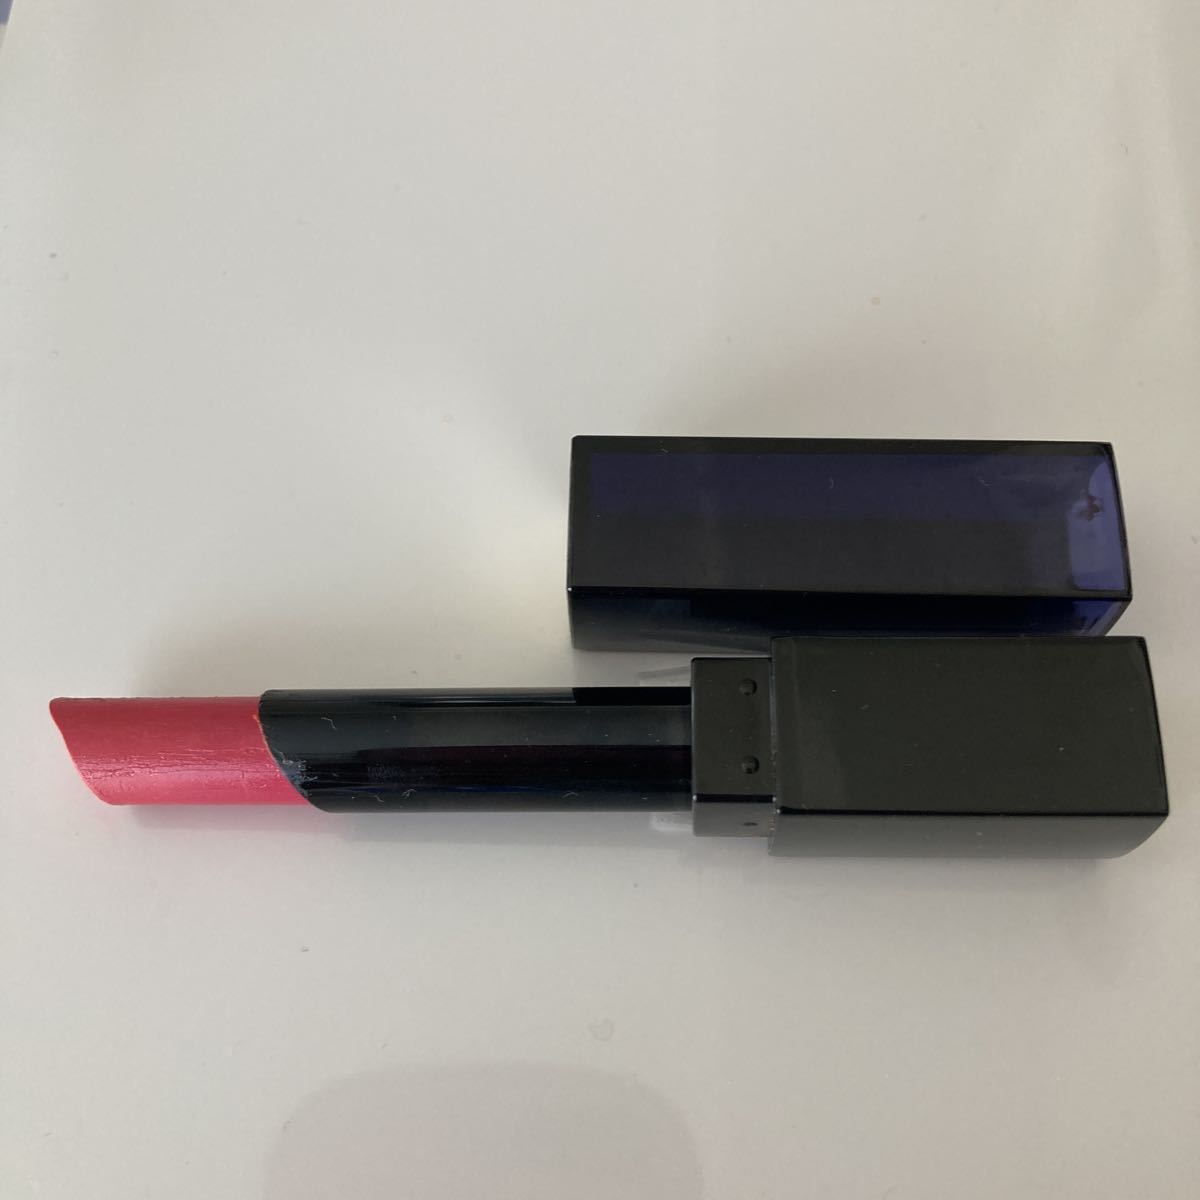  media * moist essence rouge *RS-05* rose series * lipstick * lipstick * regular price 1045 jpy 